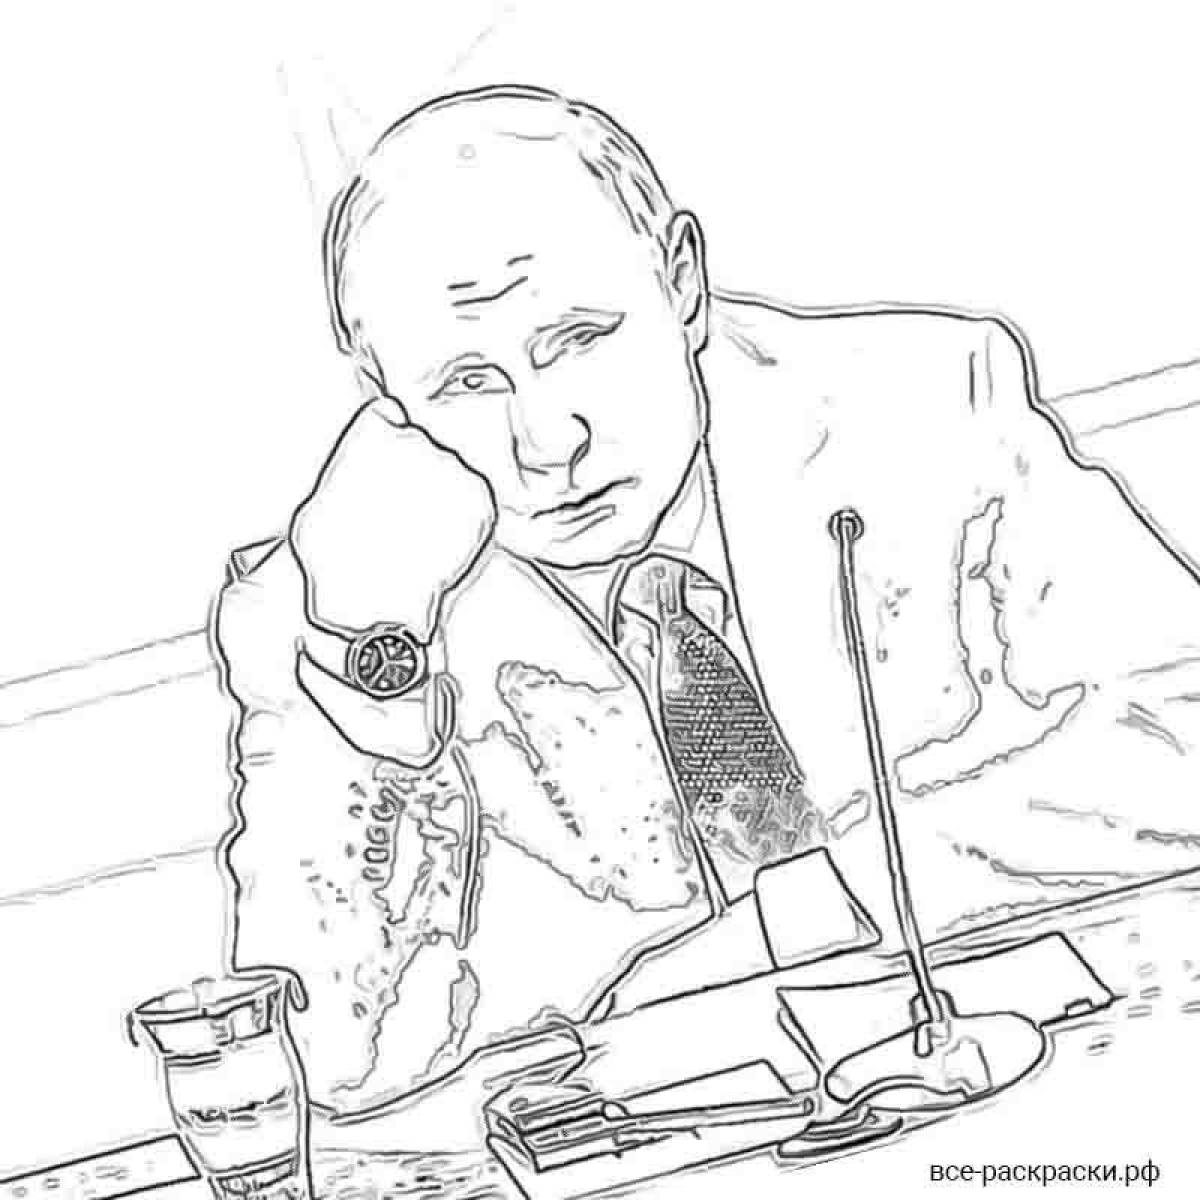 Fabulous Putin coloring page